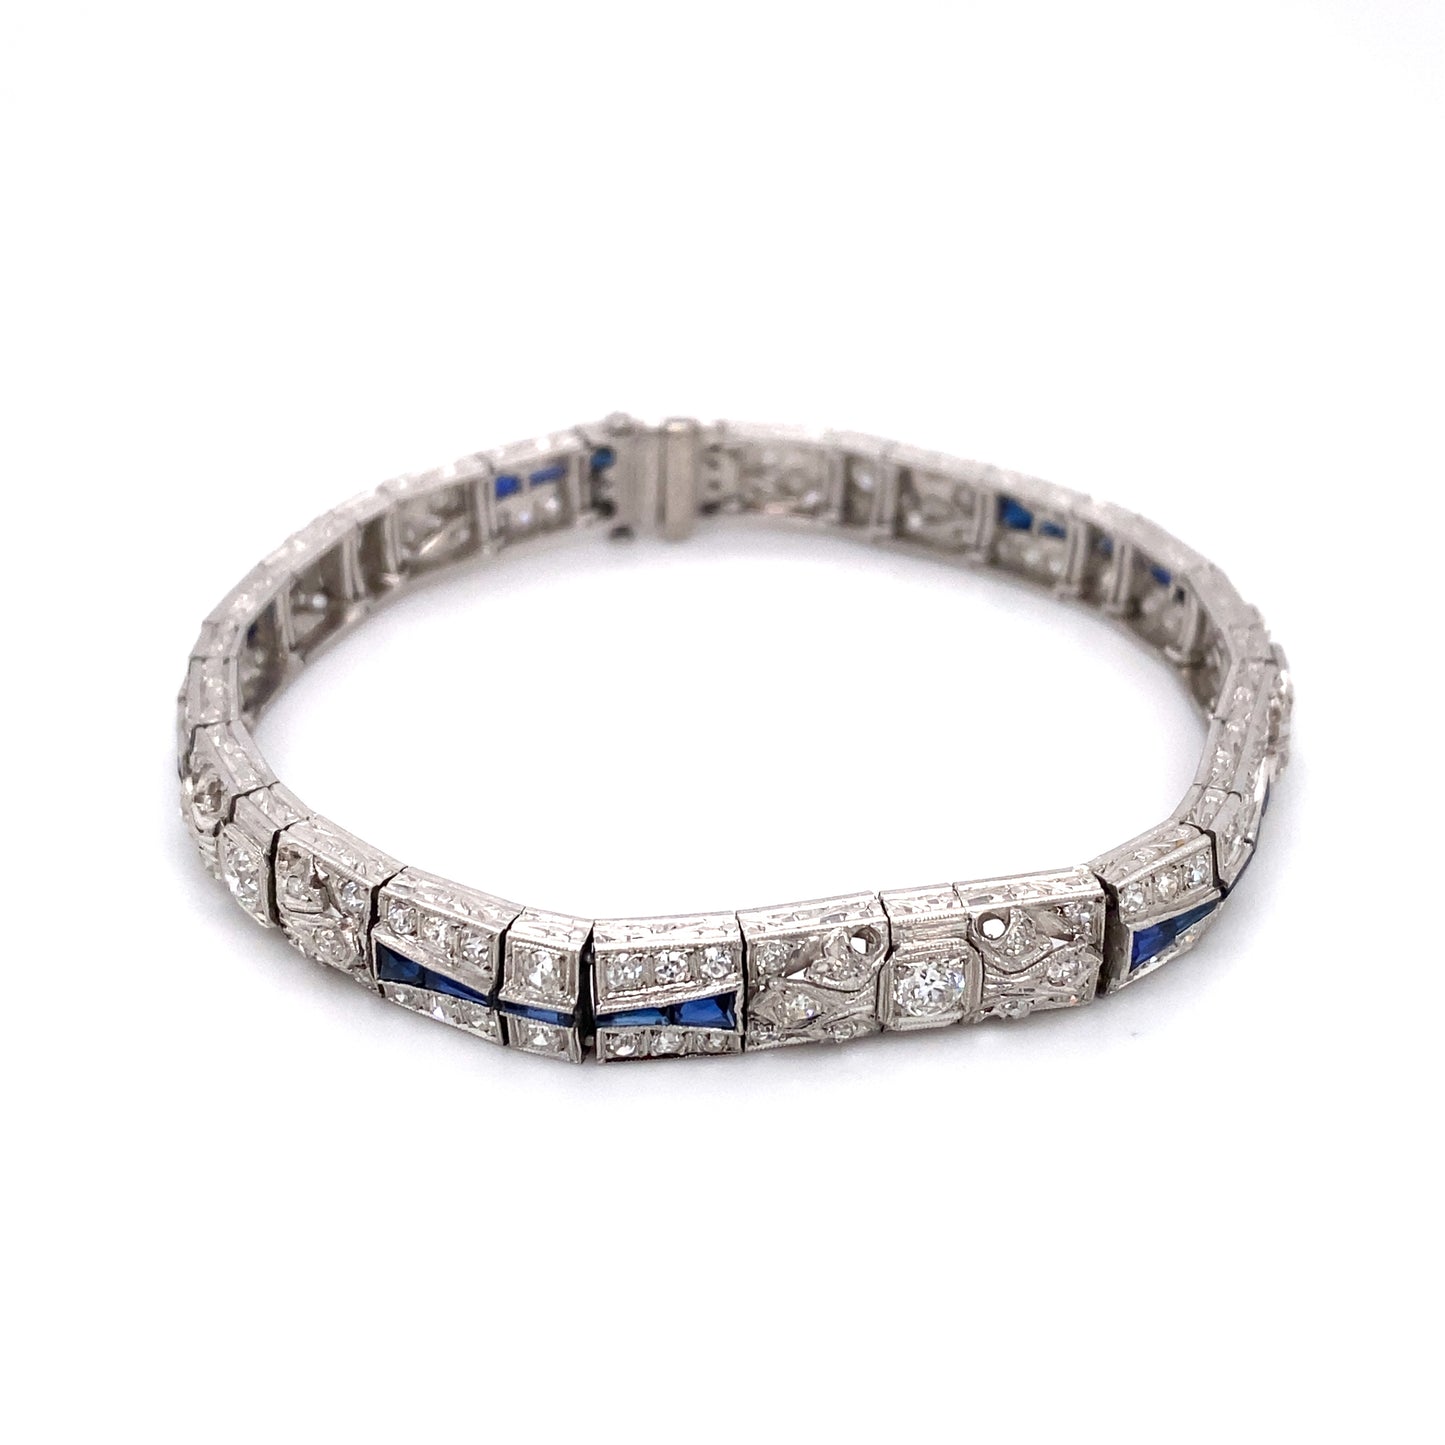 Circa 1910 Art Deco 5.0 Carat Diamond and Sapphire Bracelet in Platinum